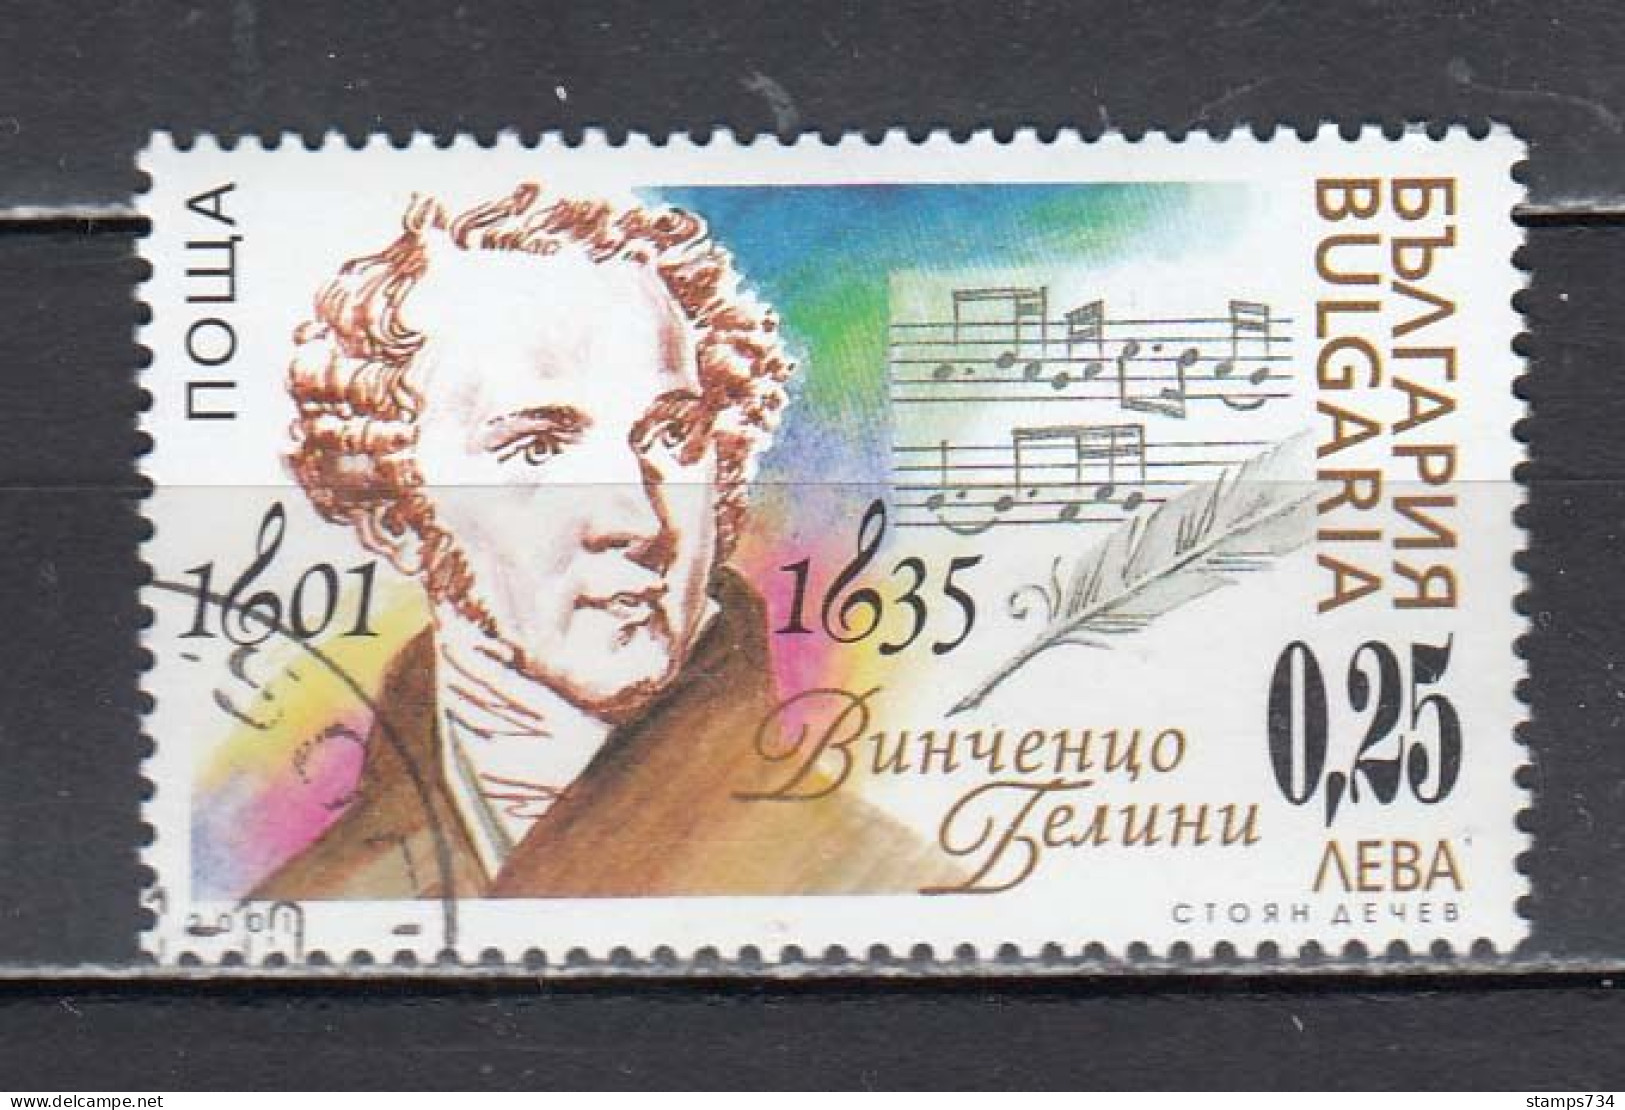 Bulgaria 2001 - 200th Birthday Of Vincenzo Bellini, Italian Composer, Mi-Nr. 4538, Used - Gebruikt